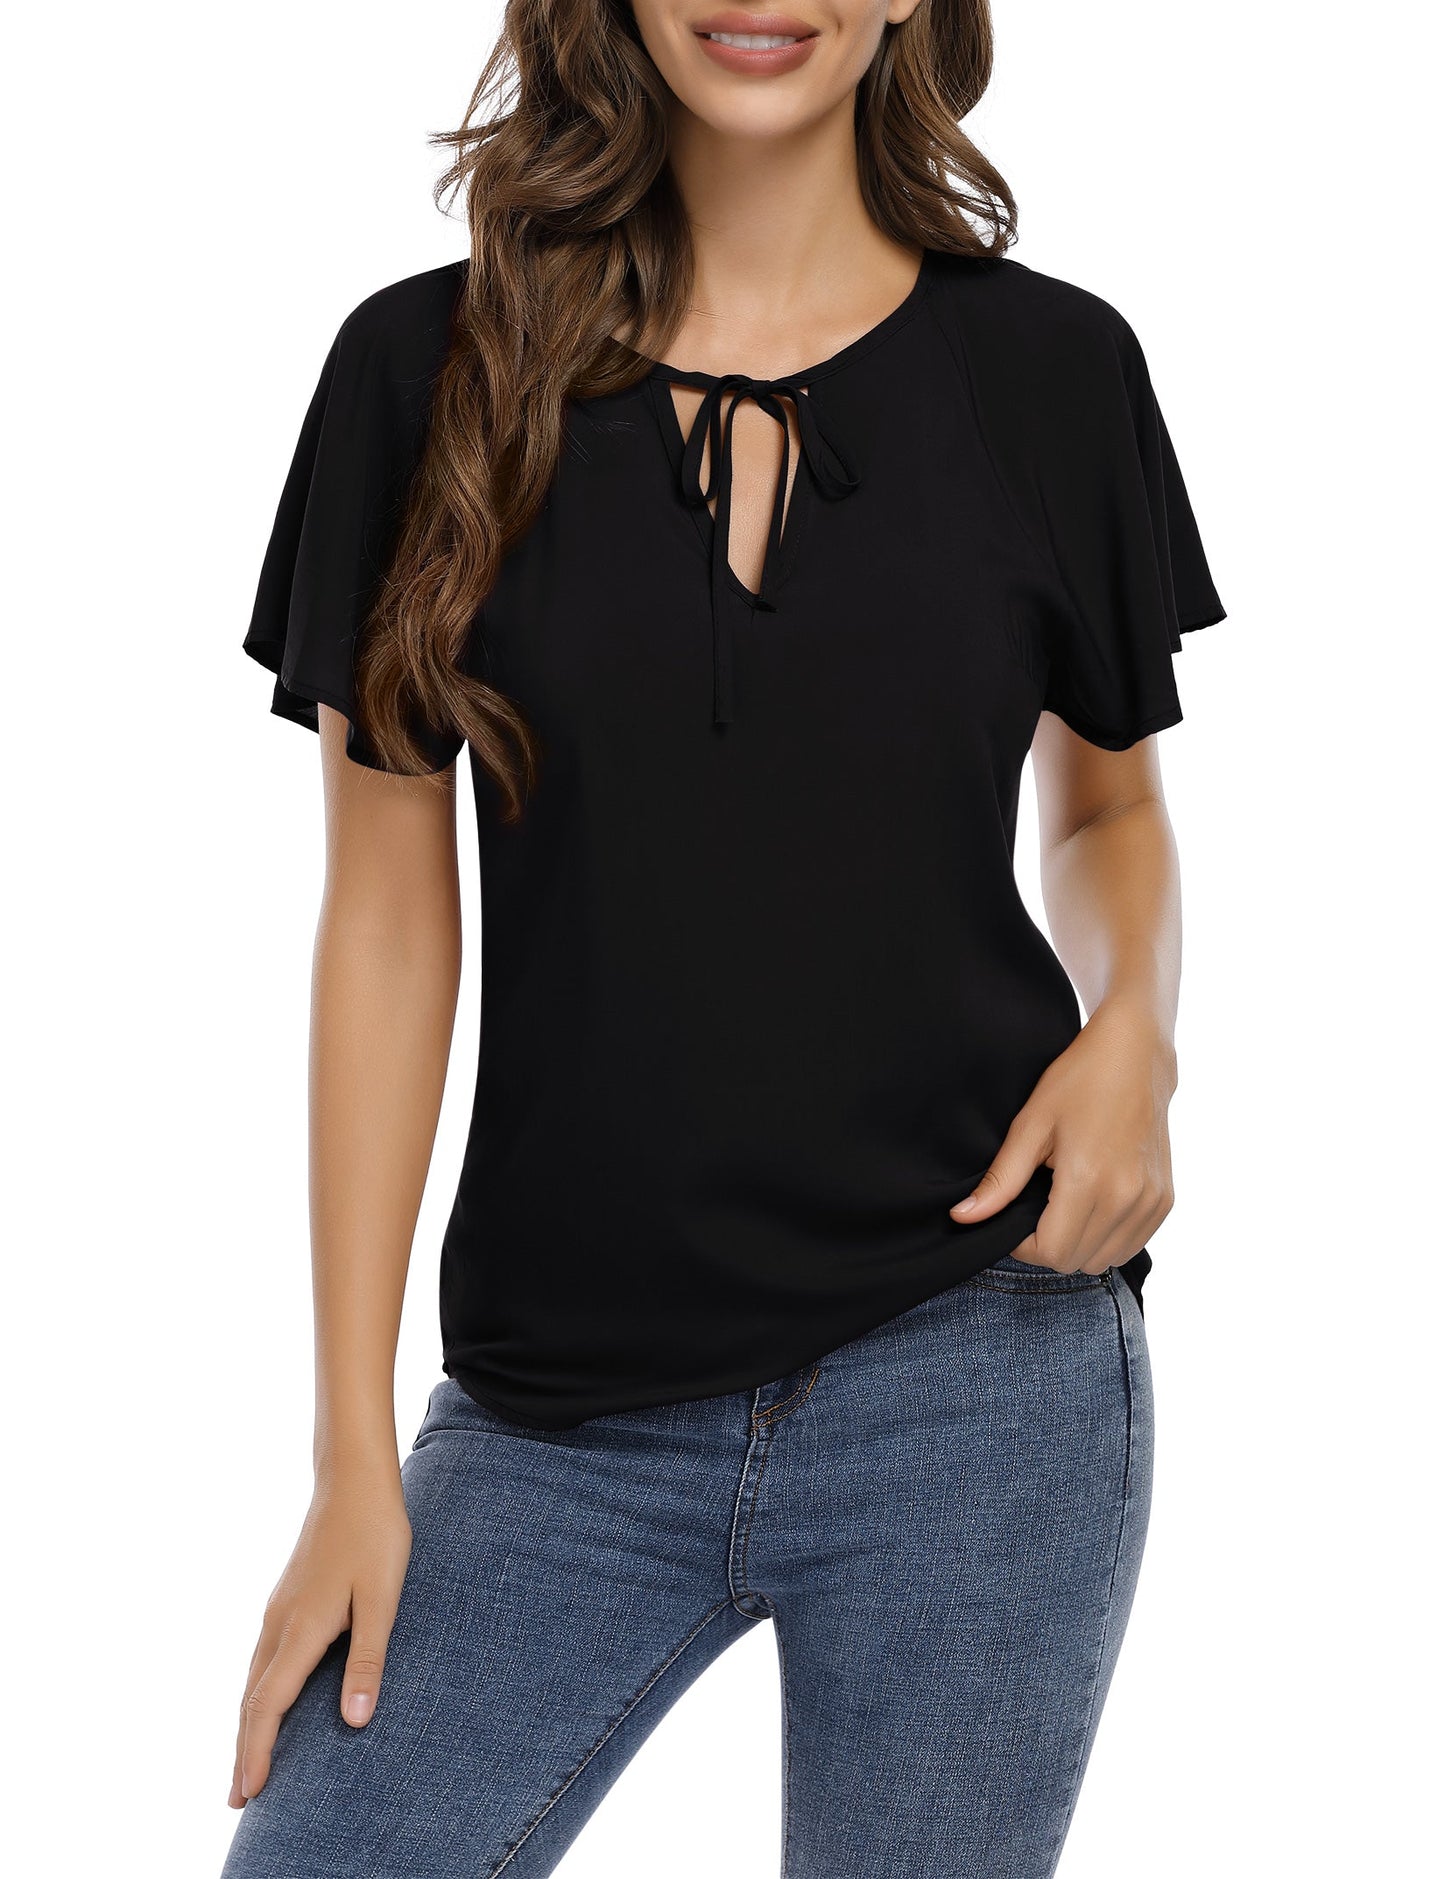 YESFASHION Women's V Neck Top Short Ruffle Drawstring Shirt Black